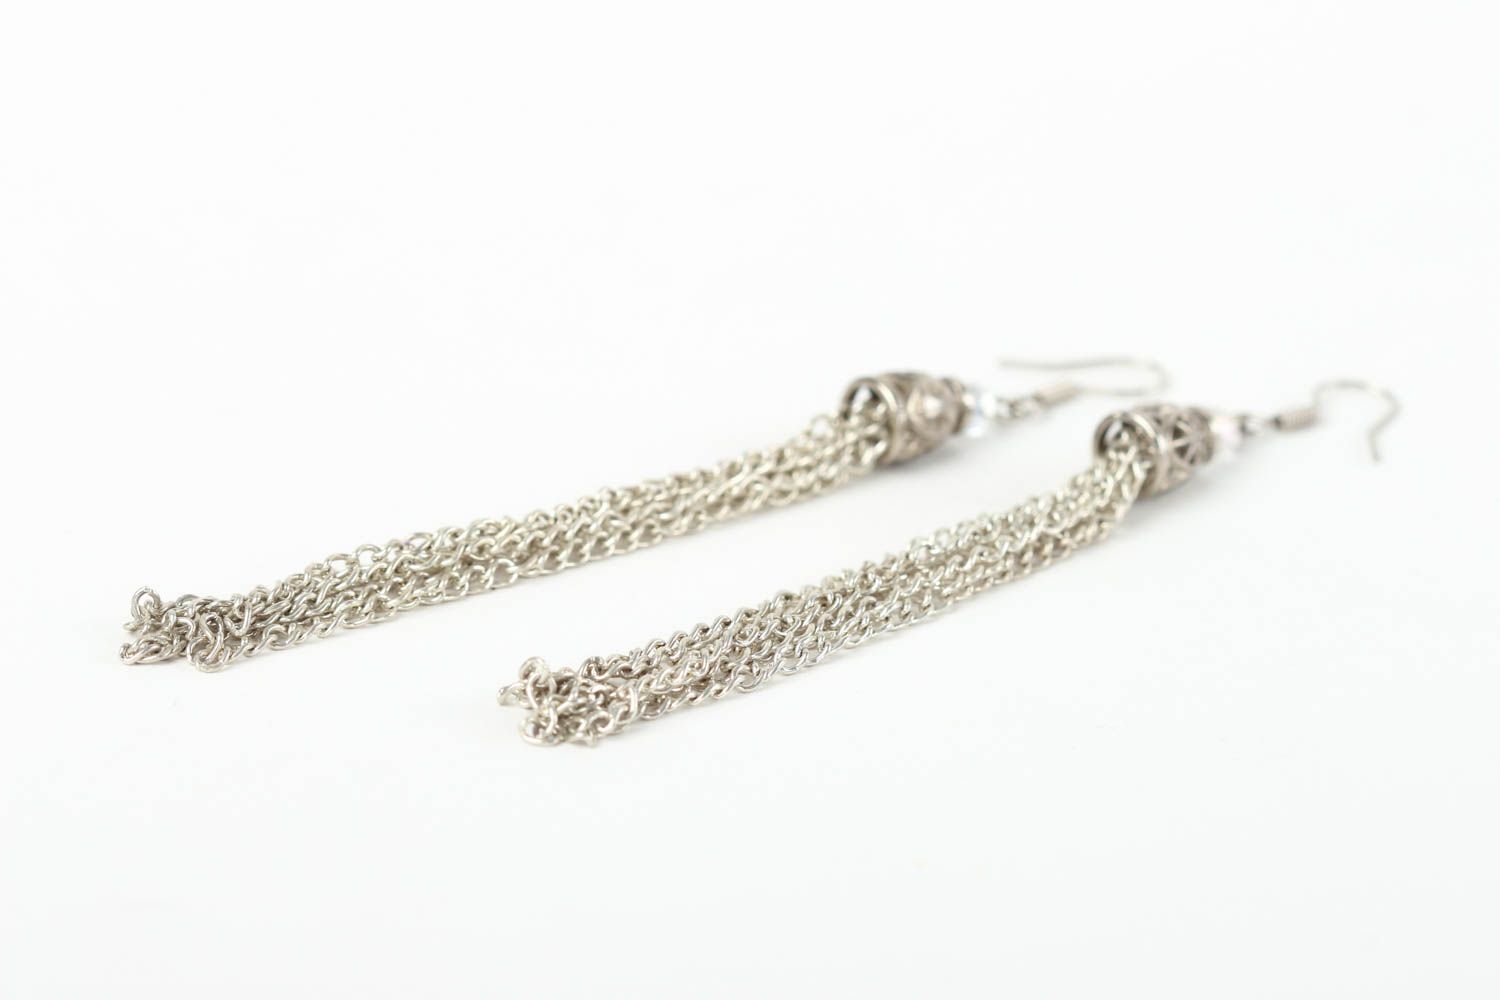 Handmade metal earrings long earrings with charms crystal earrings gift for girl photo 3